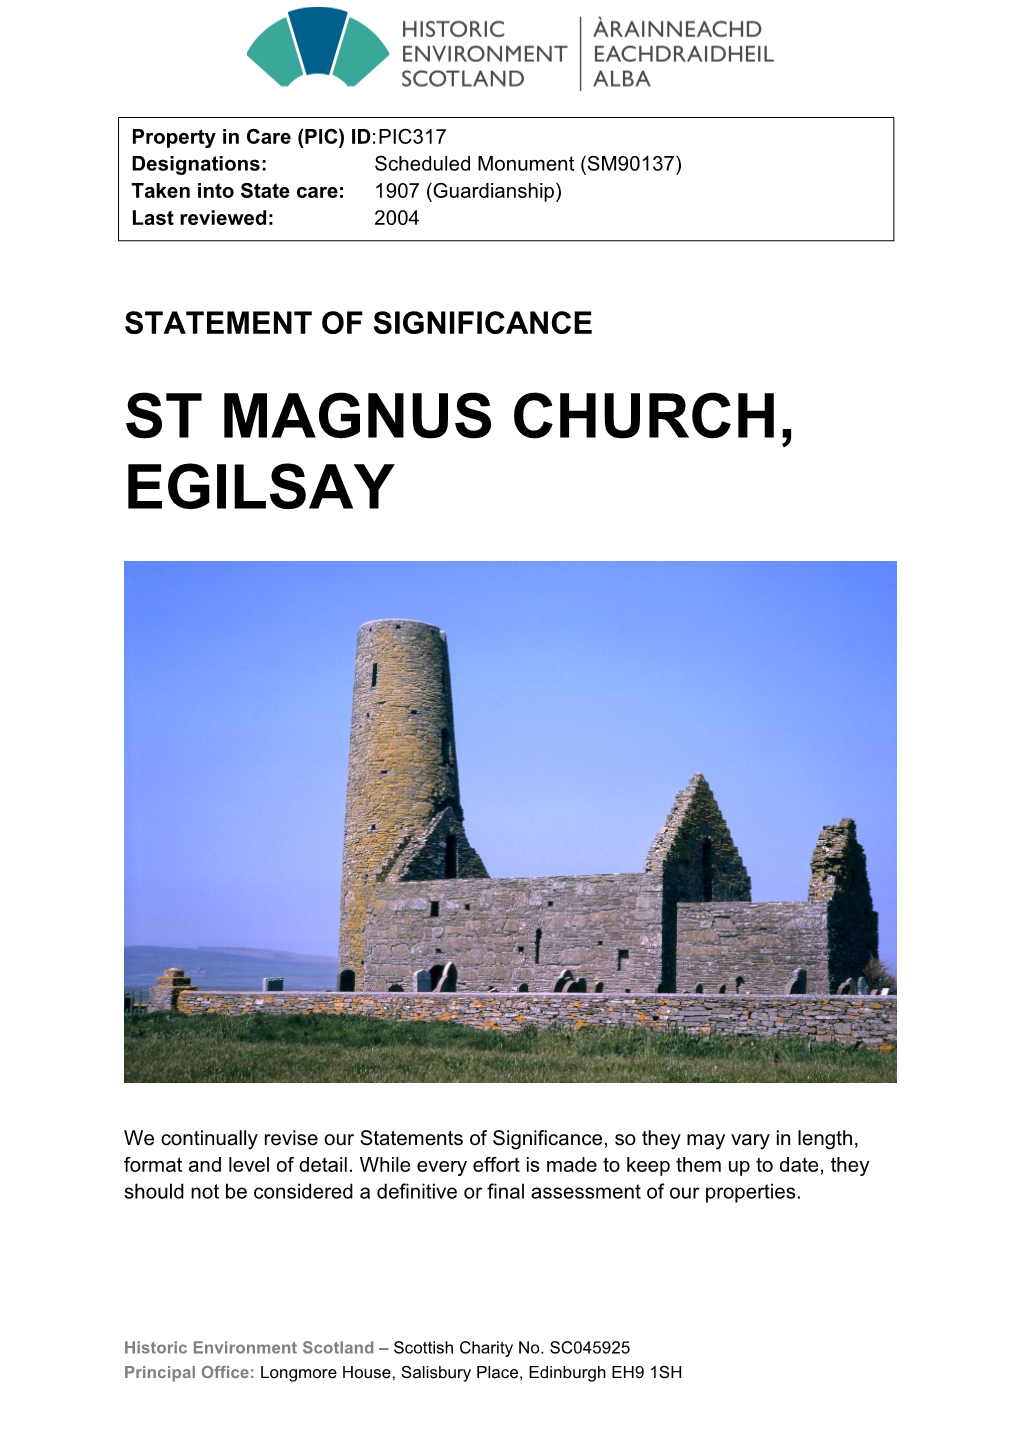 St Magnus Church Egilsay